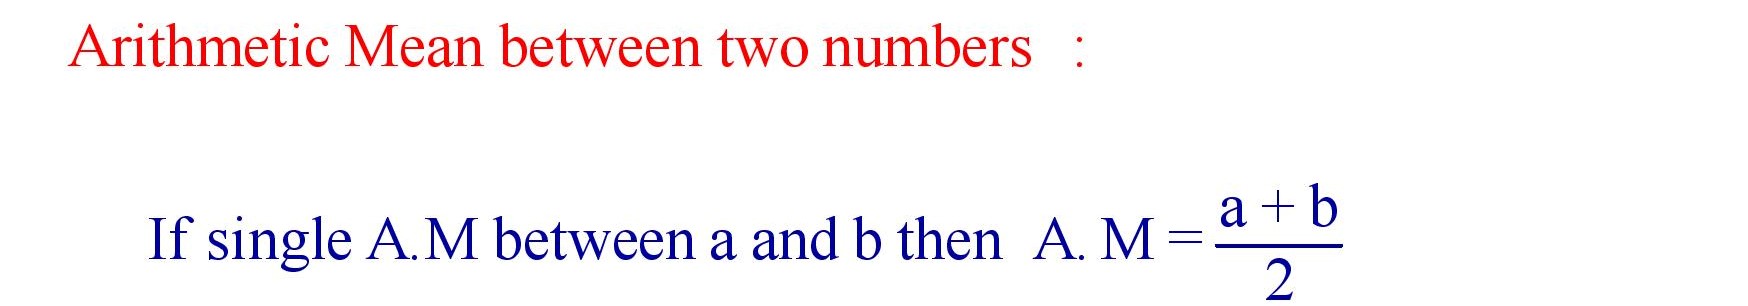 Arithmetic Mean between two numbers